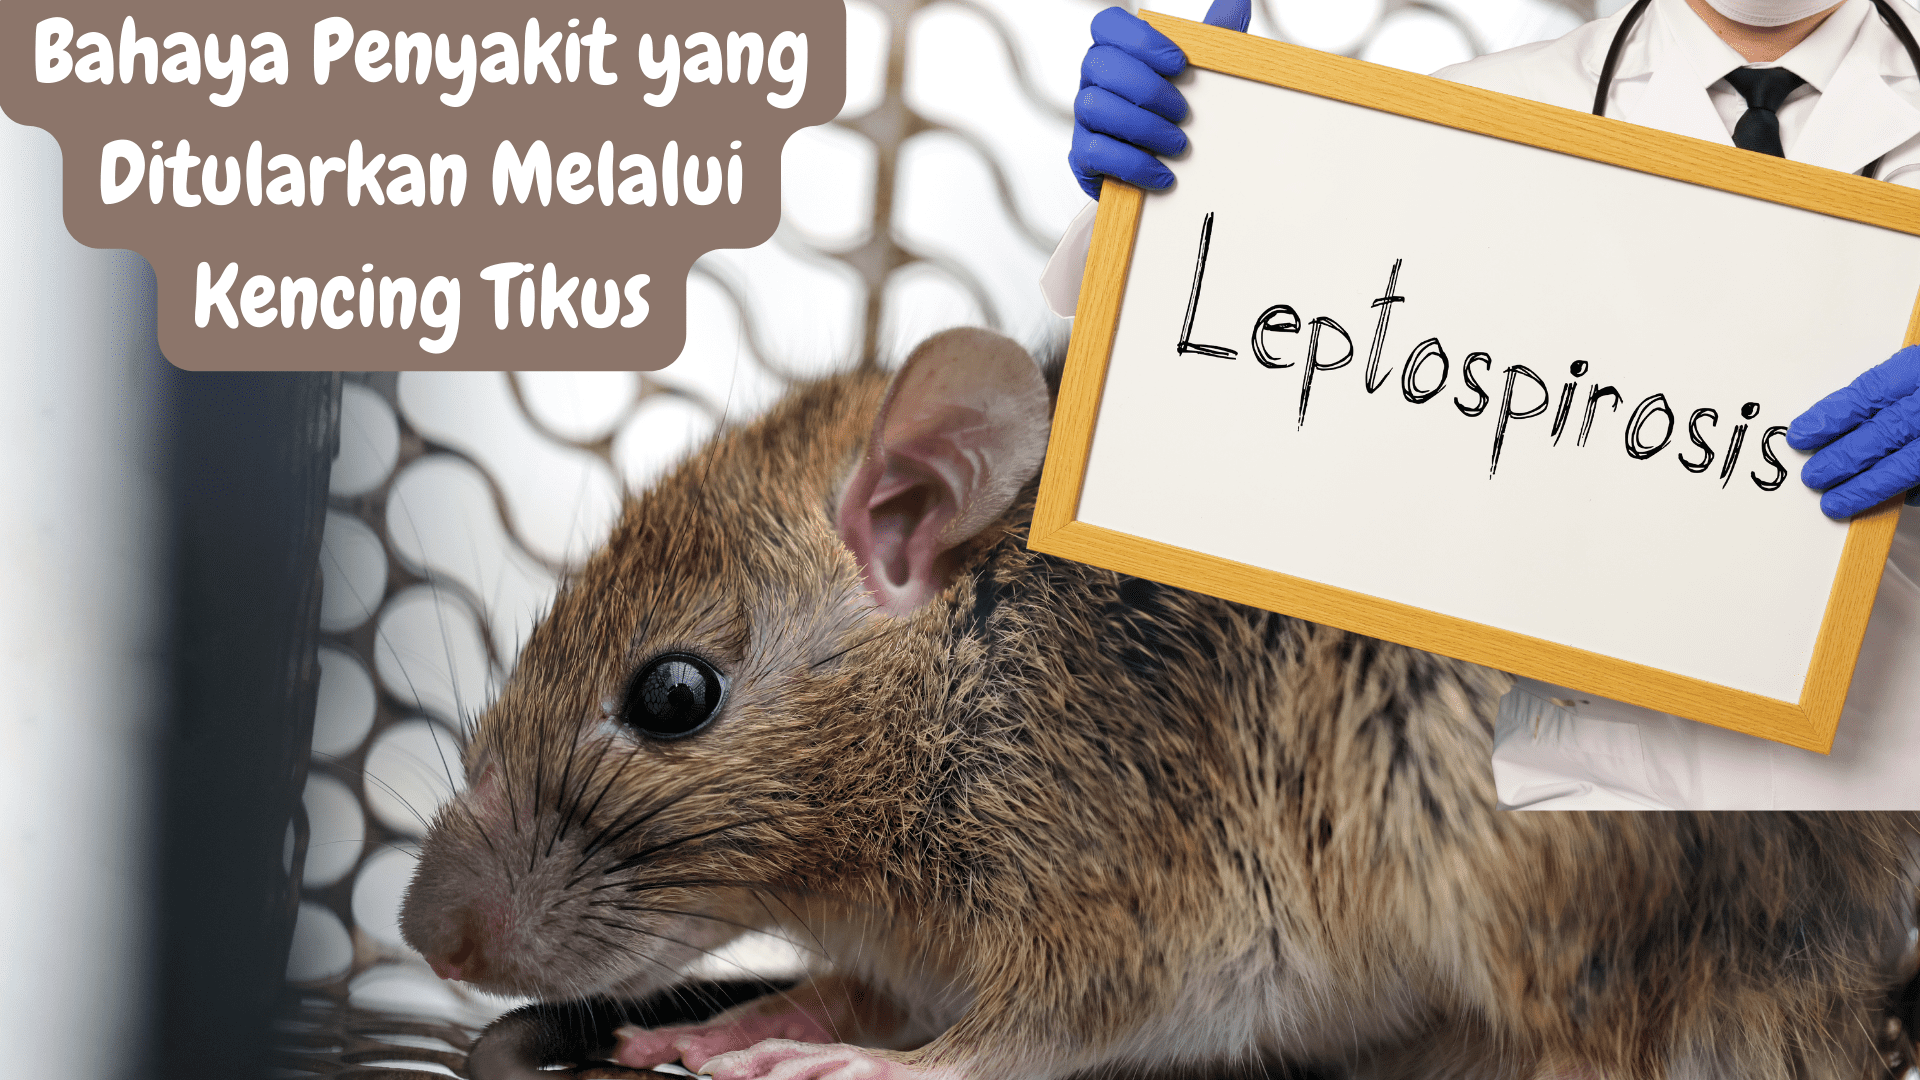 Awas Bahaya Lestospirosis, Penyakit yang Ditularkan Melalui Kencing Tikus, Begini Tanda-tandanya